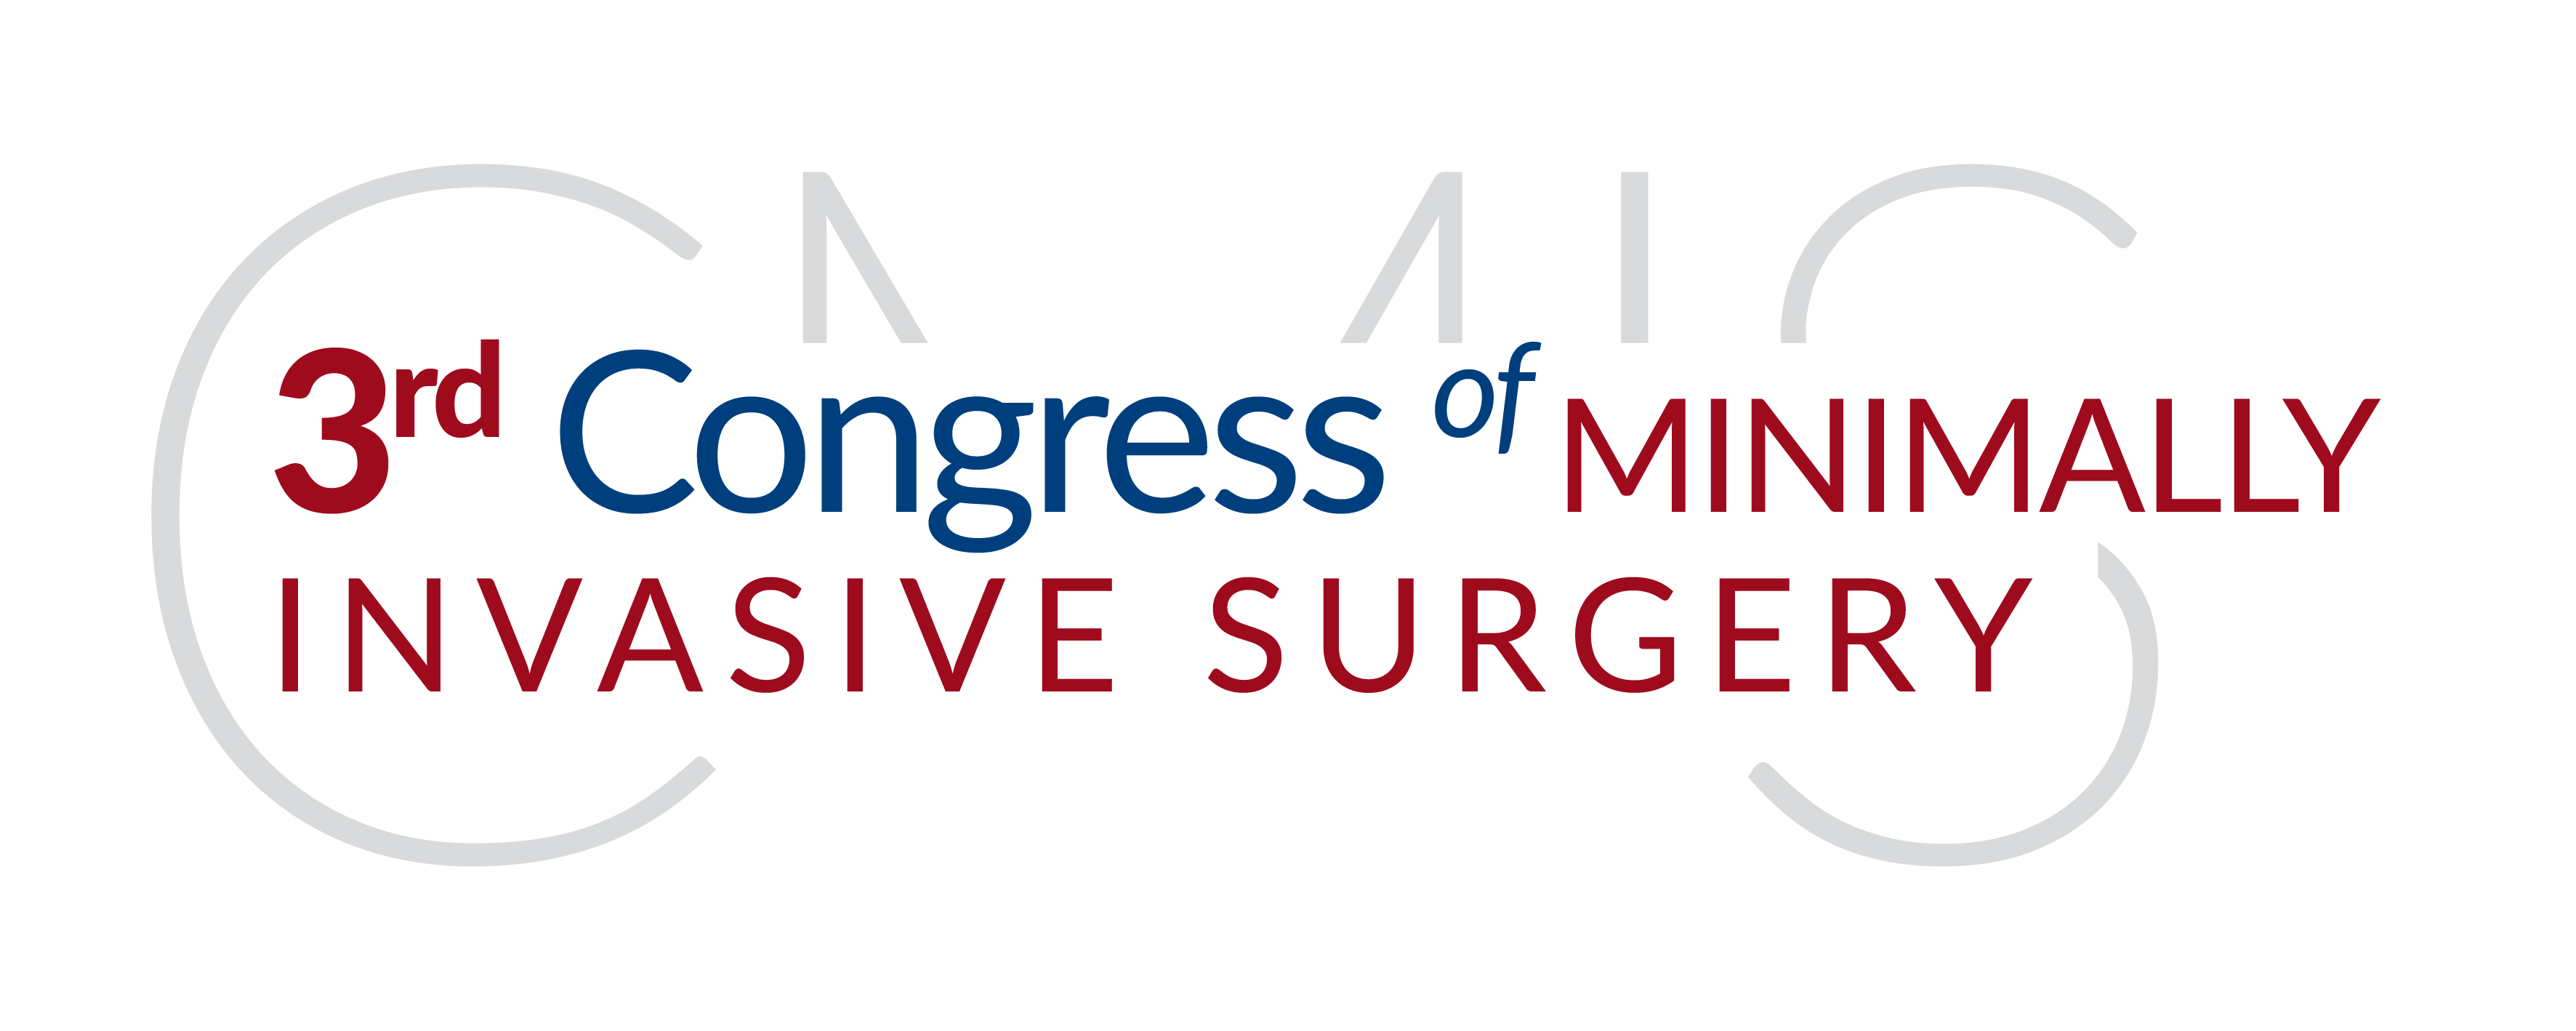 3rd Congress of Minimally Invasive Surgery 